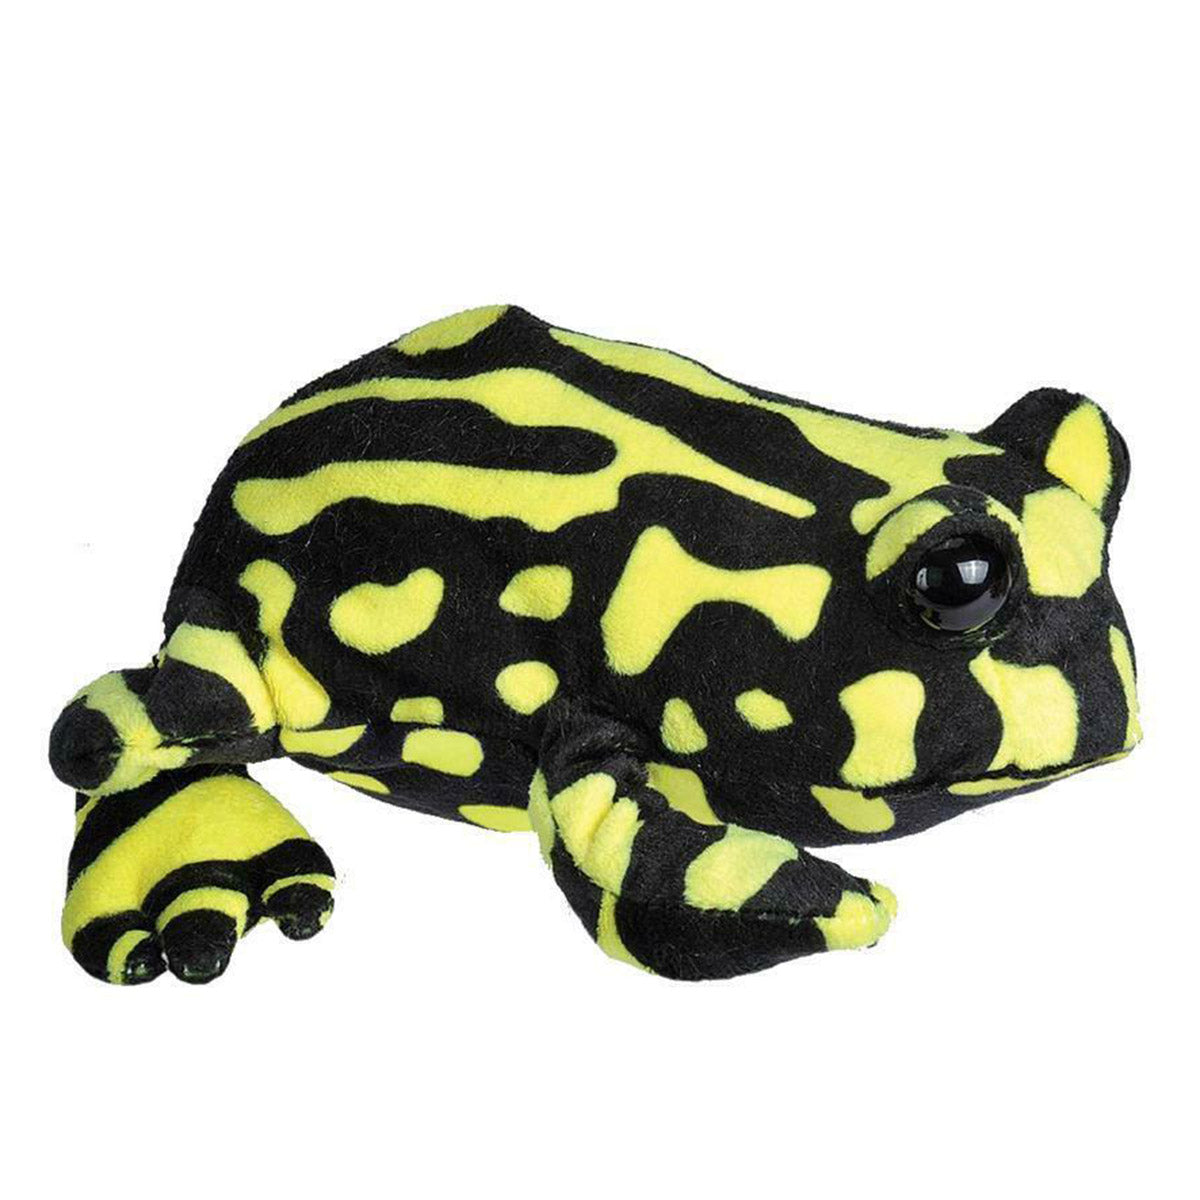 Animals of Australia - Corroboree Frog Figurine